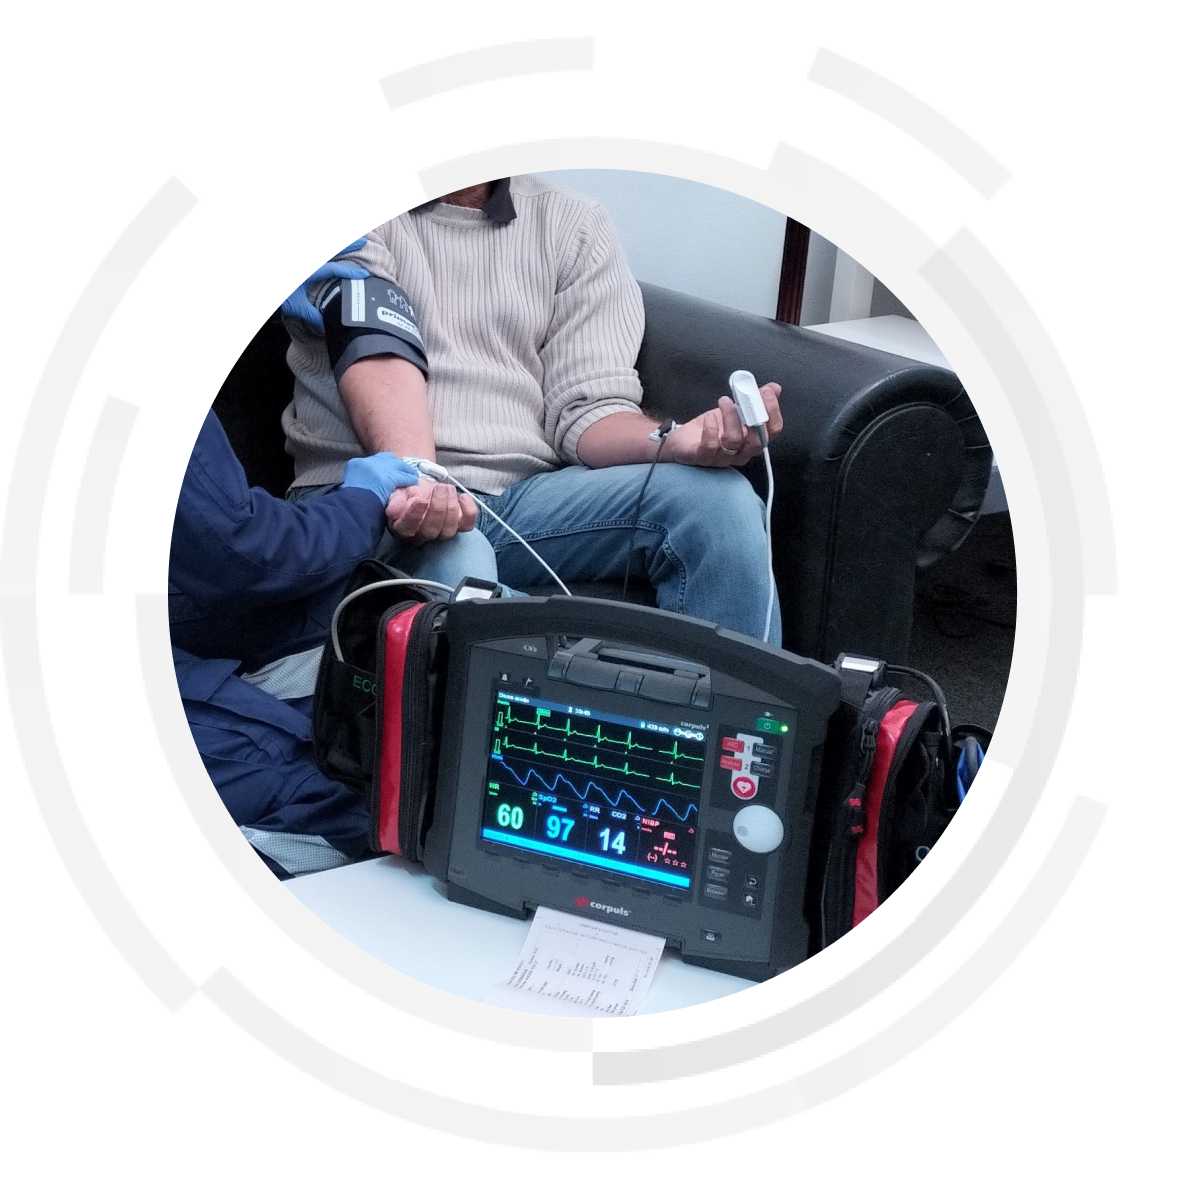 The current NSW Health monitor / defibrillator.